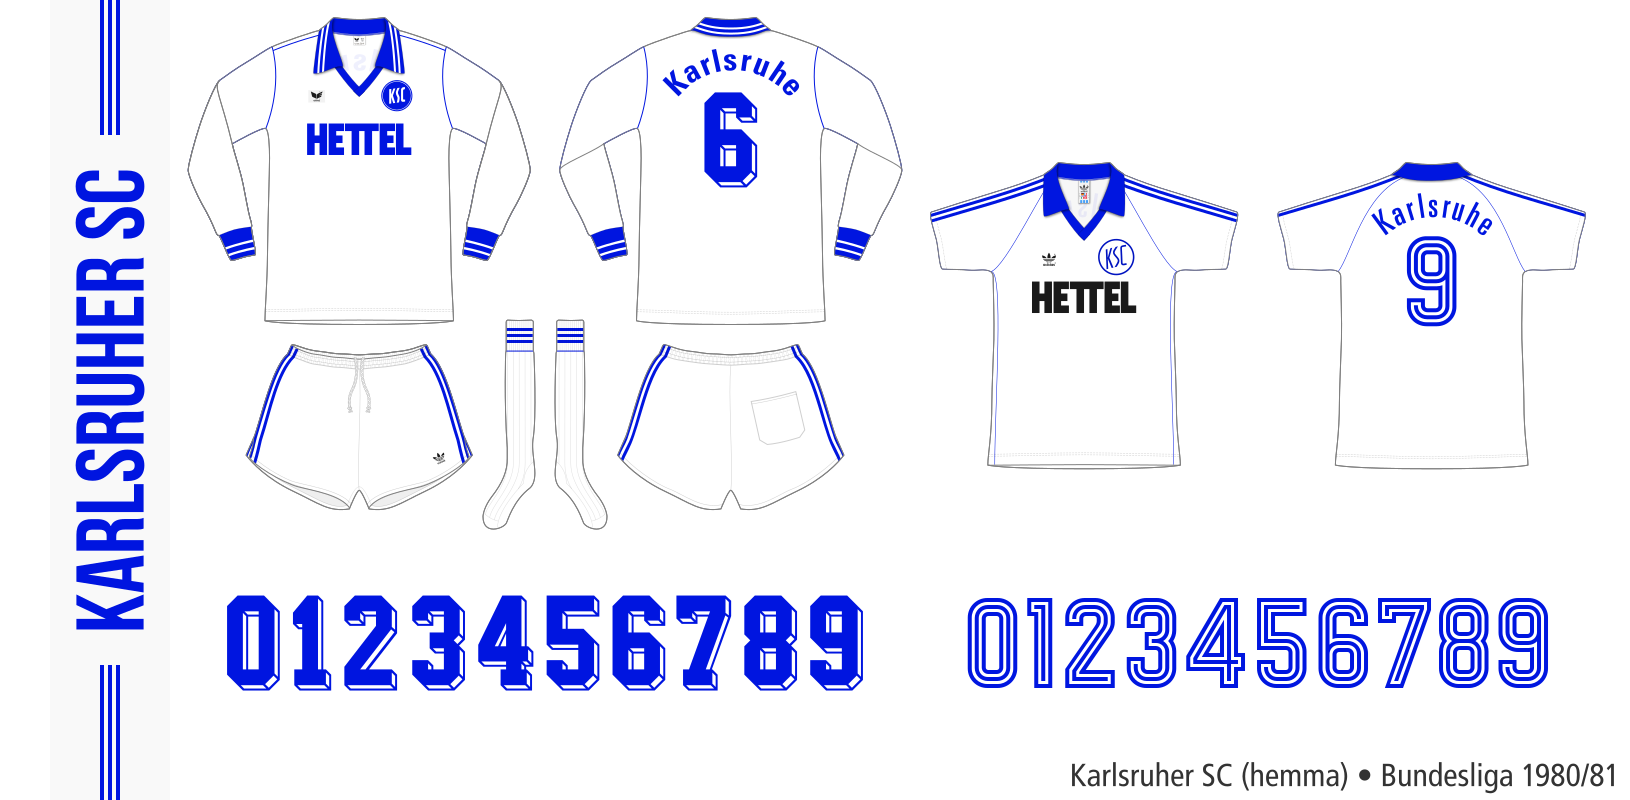 Karlsruher SC 1980/81 (hemma)